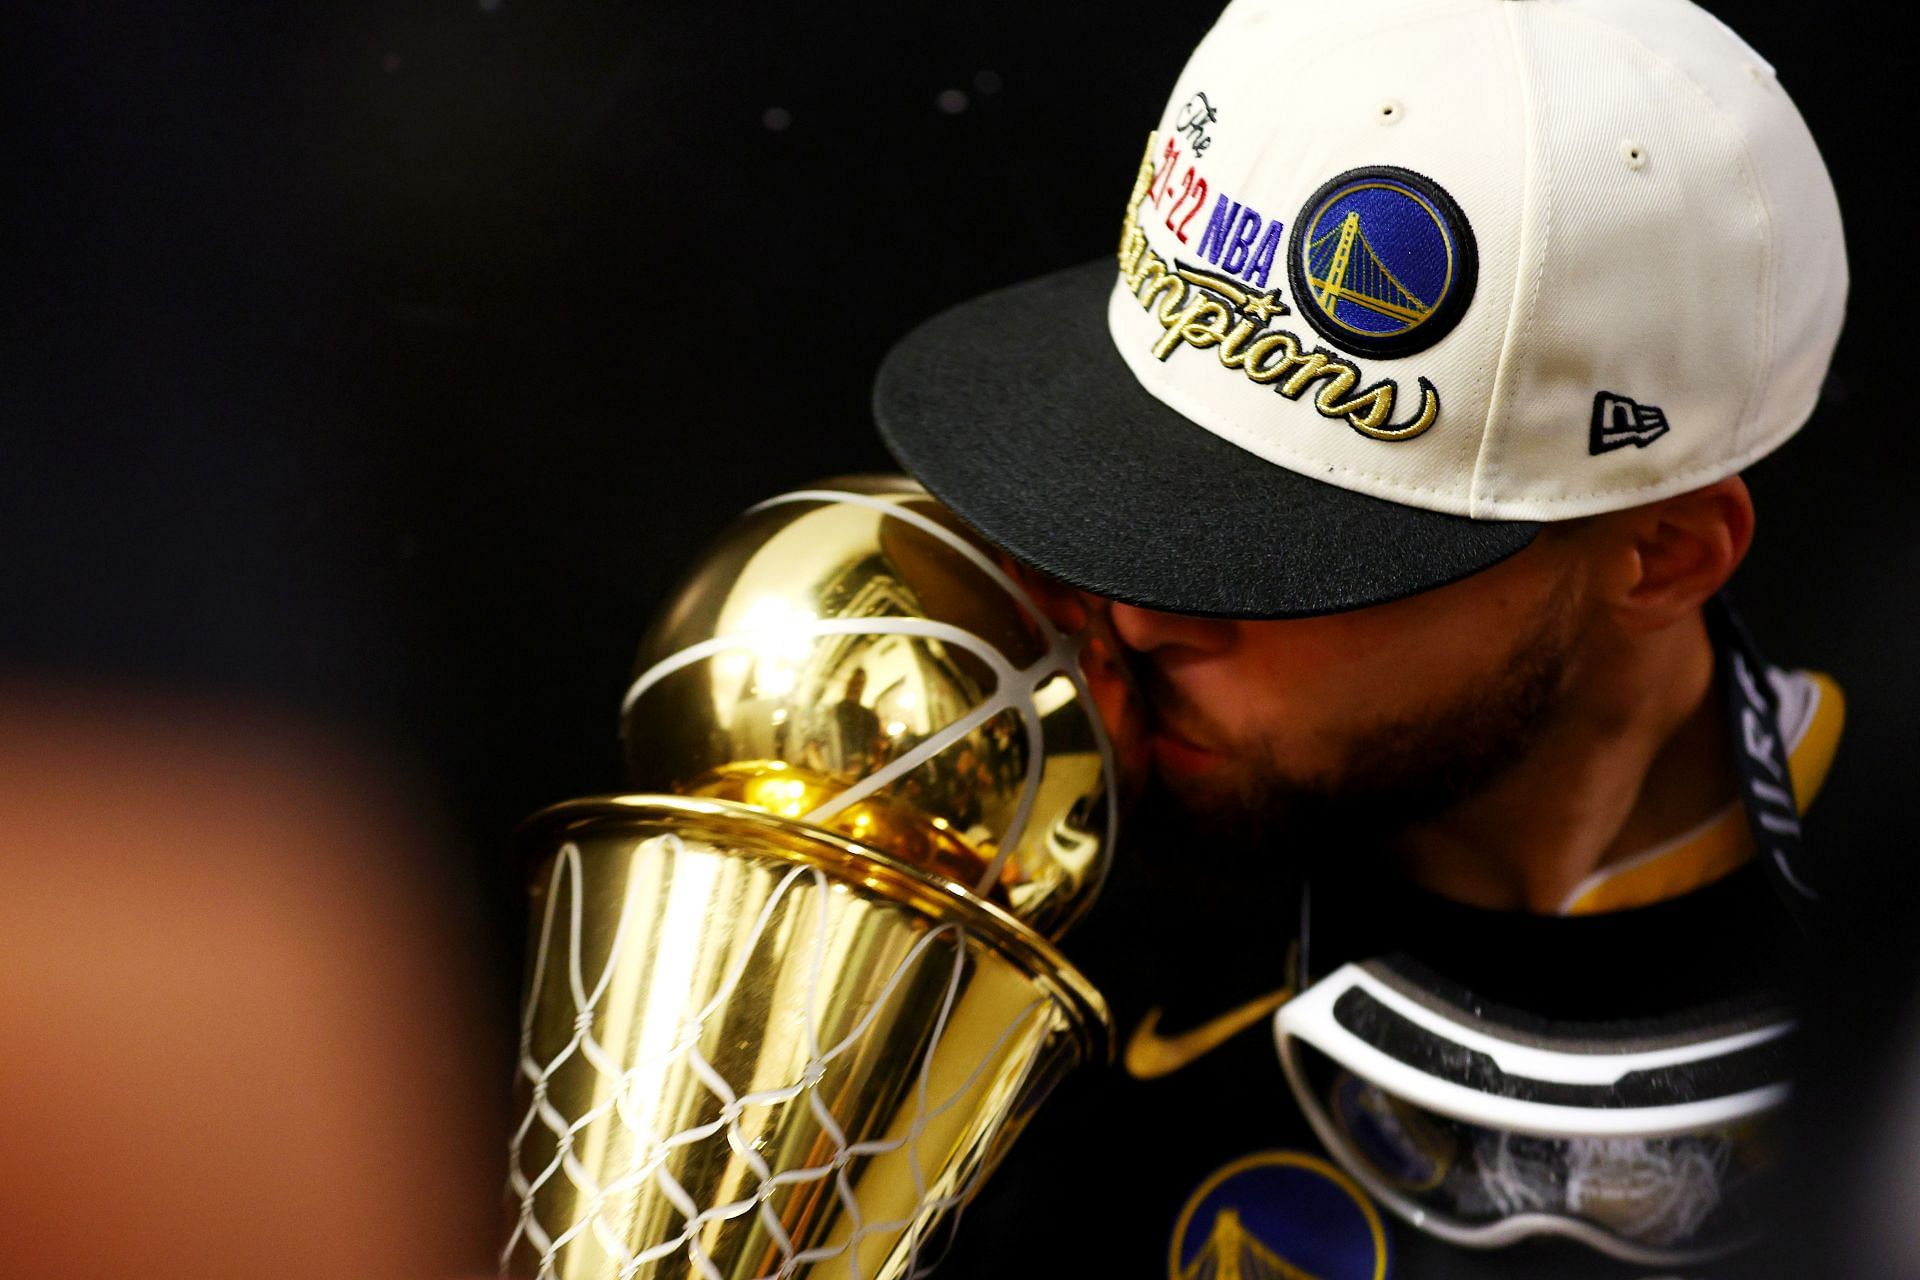 Curry telah bermain seperti MVP musim ini sampai cedera memperlambatnya.